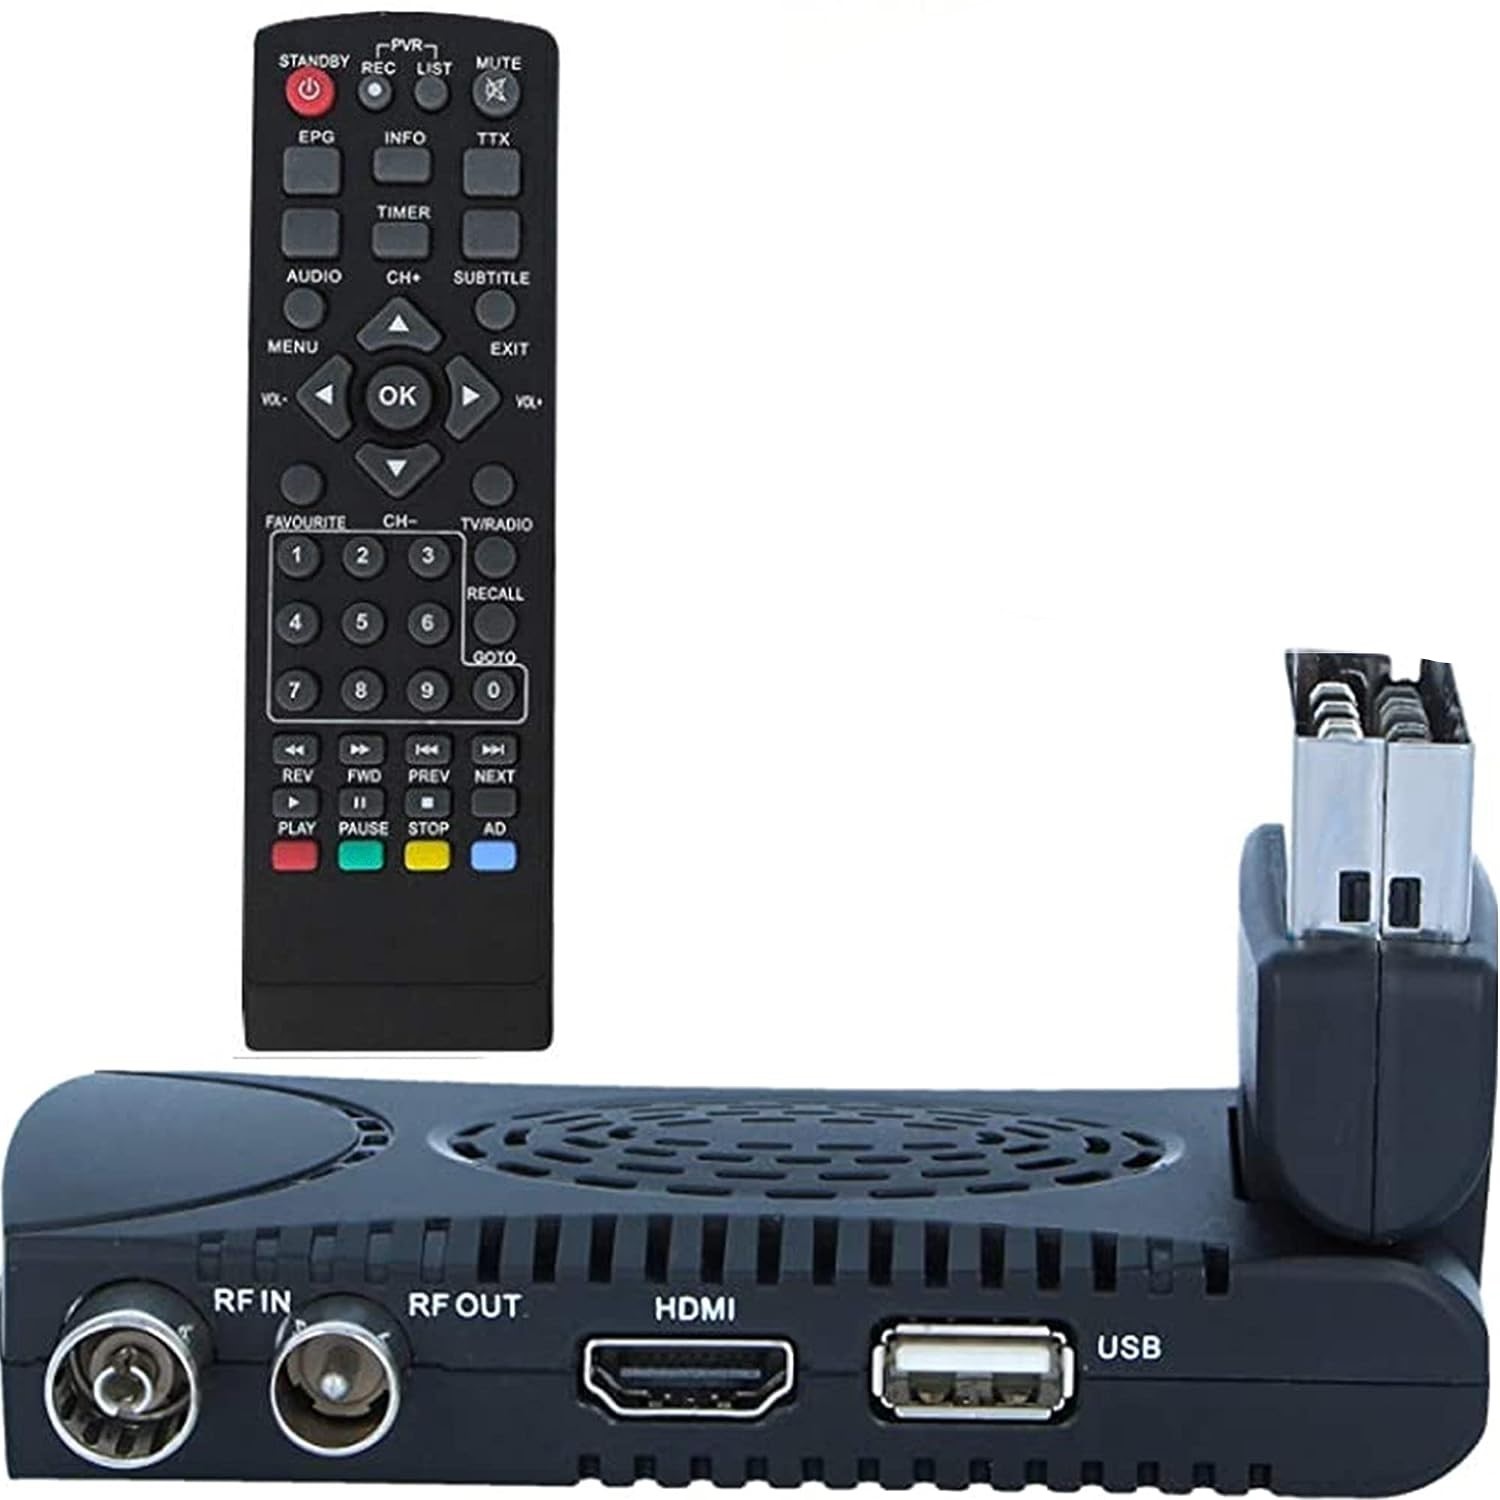 RECEPTOR TDT HD EUROCONECTOR/HDMI RT6130T2